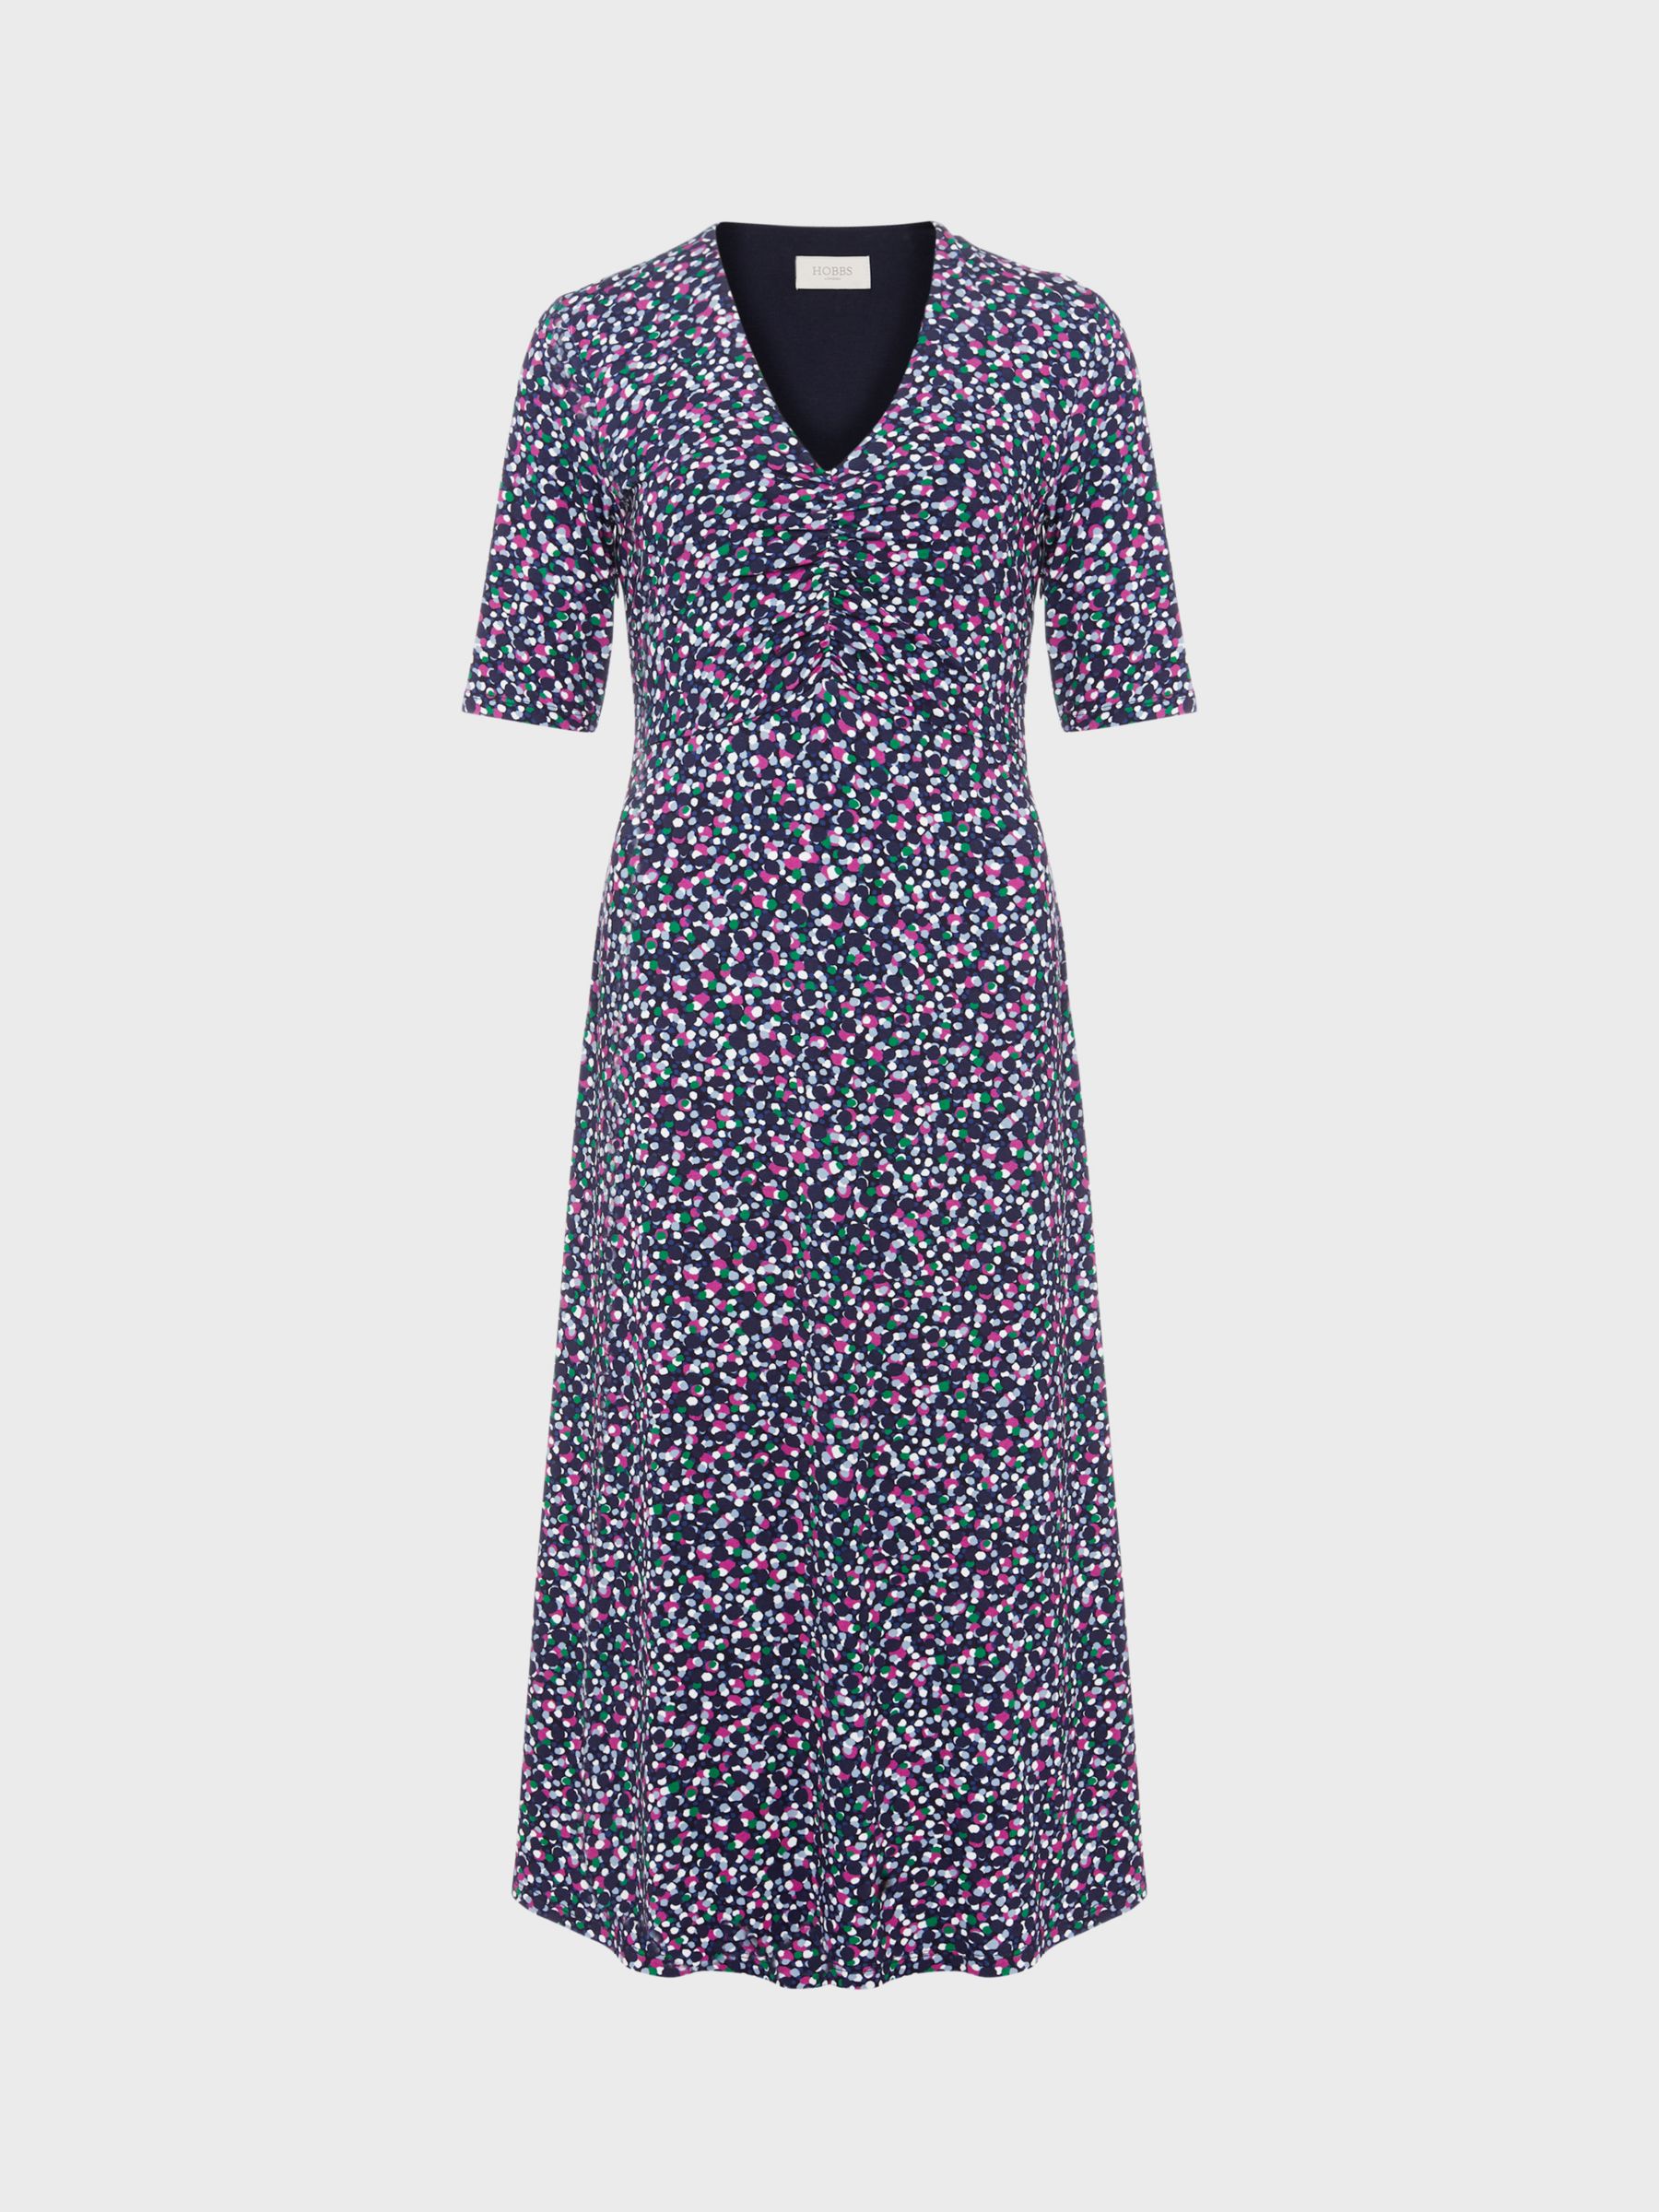 Hobbs Frankie Spot Print Midi Dress, Navy/Multi, 6